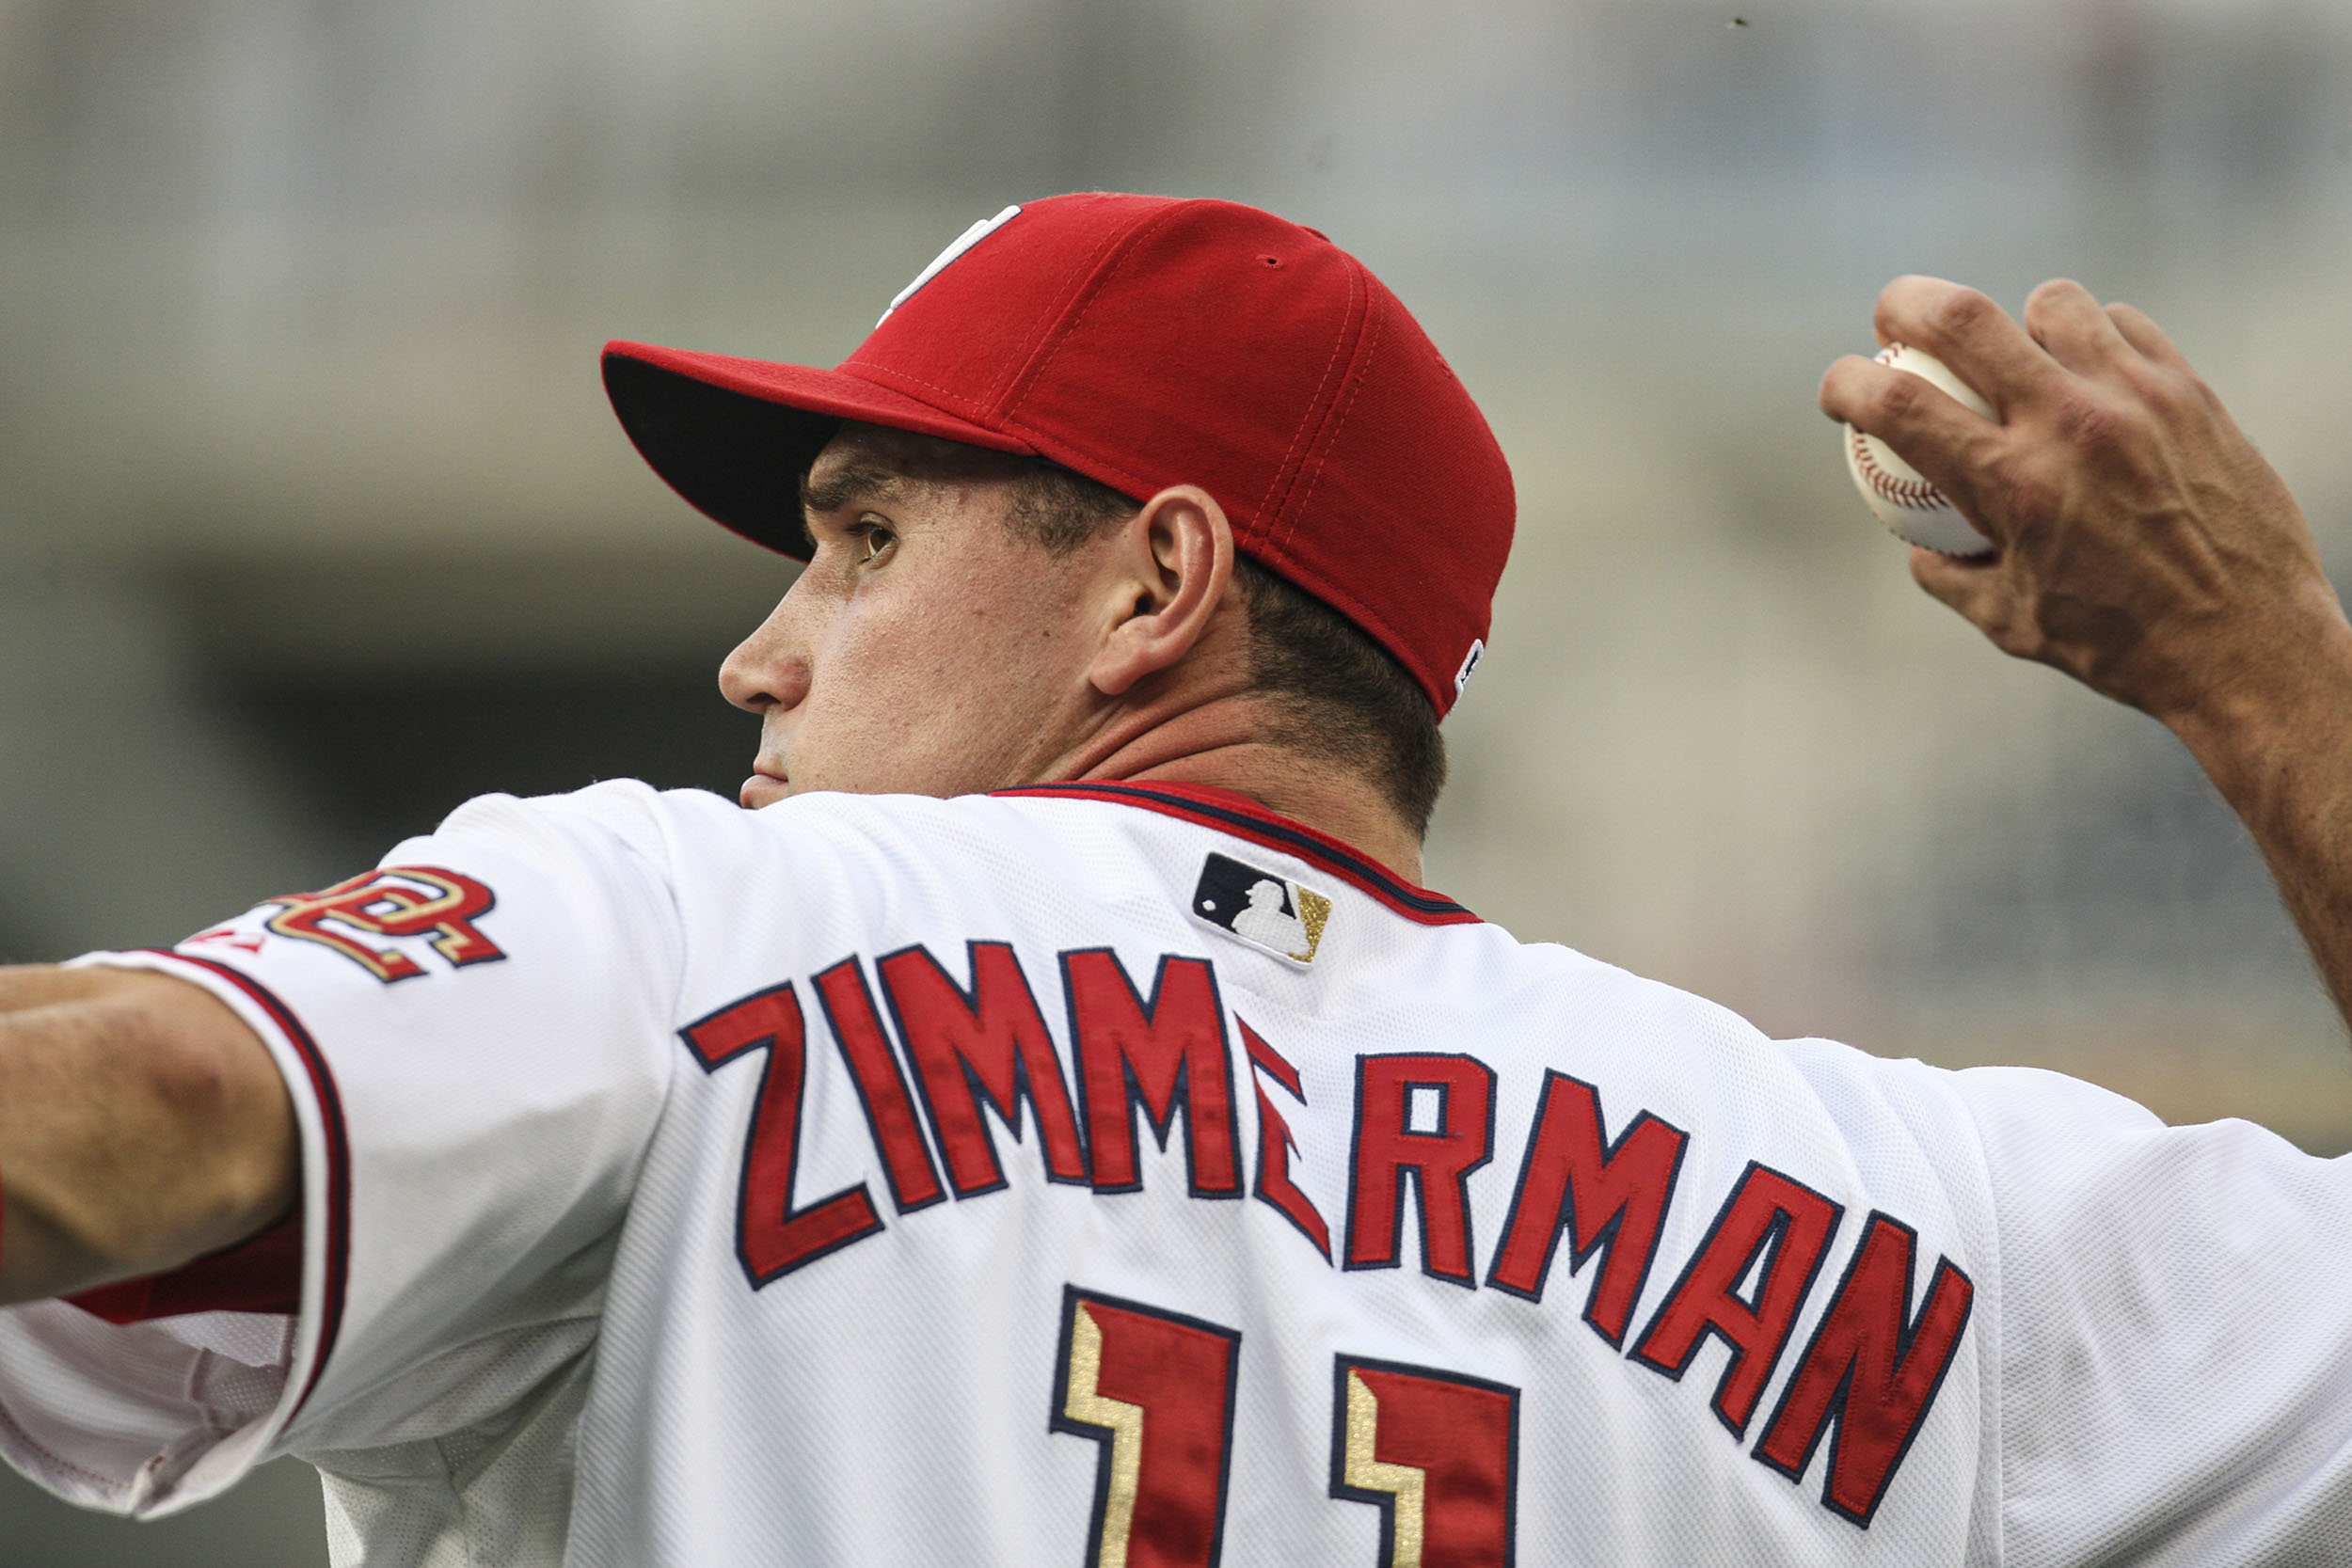 Ryan Zimmerman announces retirement from baseball